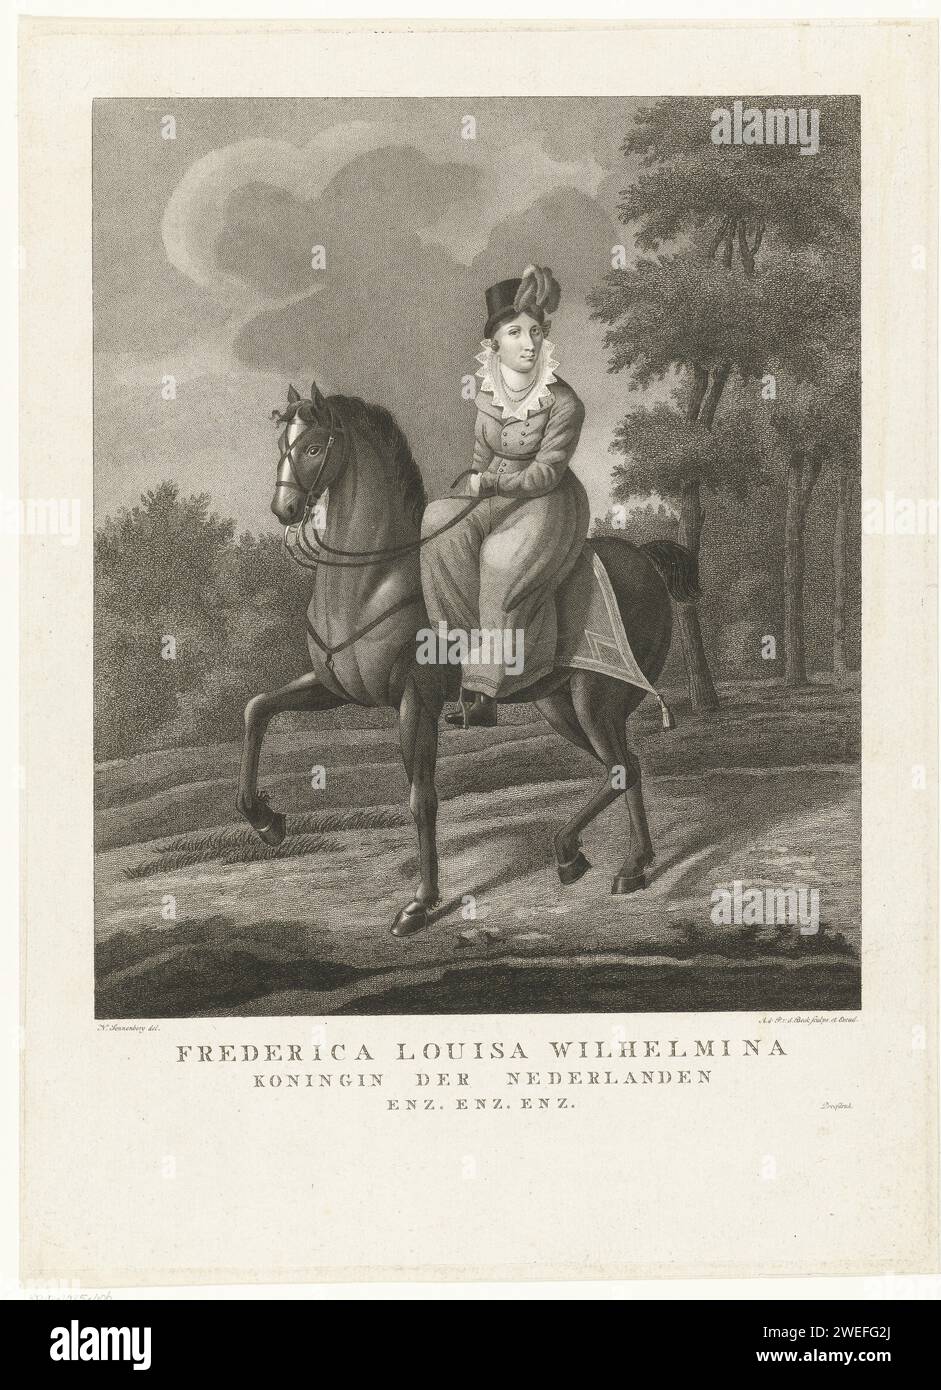 Portrait of Queen Wilhelmina Frederica Louisa on horseback, Antonie and Pieter van der Beek, after Nicolaas Sonnenberg, 1795 - 1821 print  Netherlands paper etching equestrian state-portrait Stock Photo